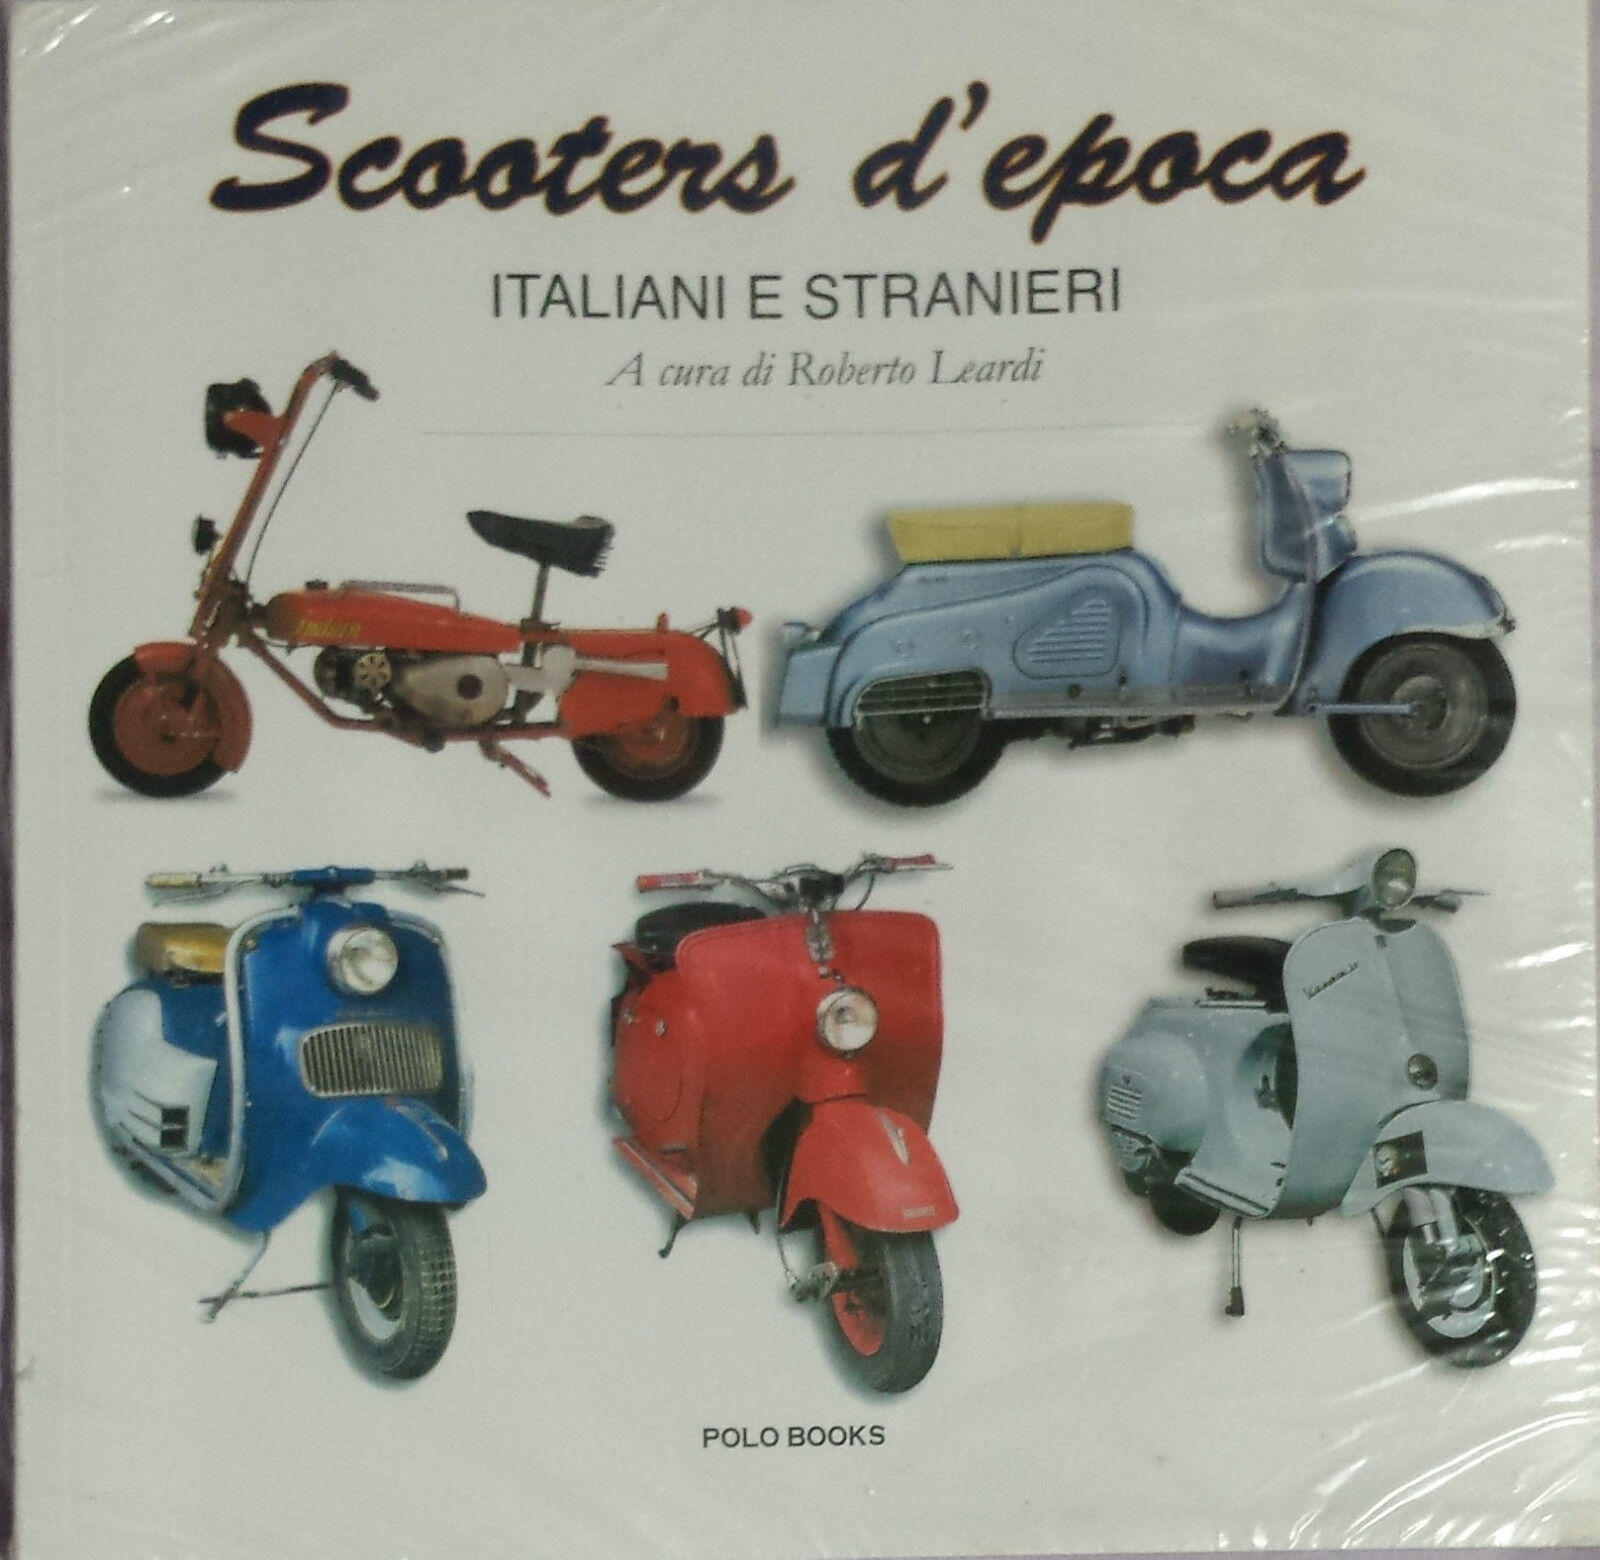 Scooters d'epoca italiani e stranieri - Roberto Leardi - Polo Books - 1970 - G